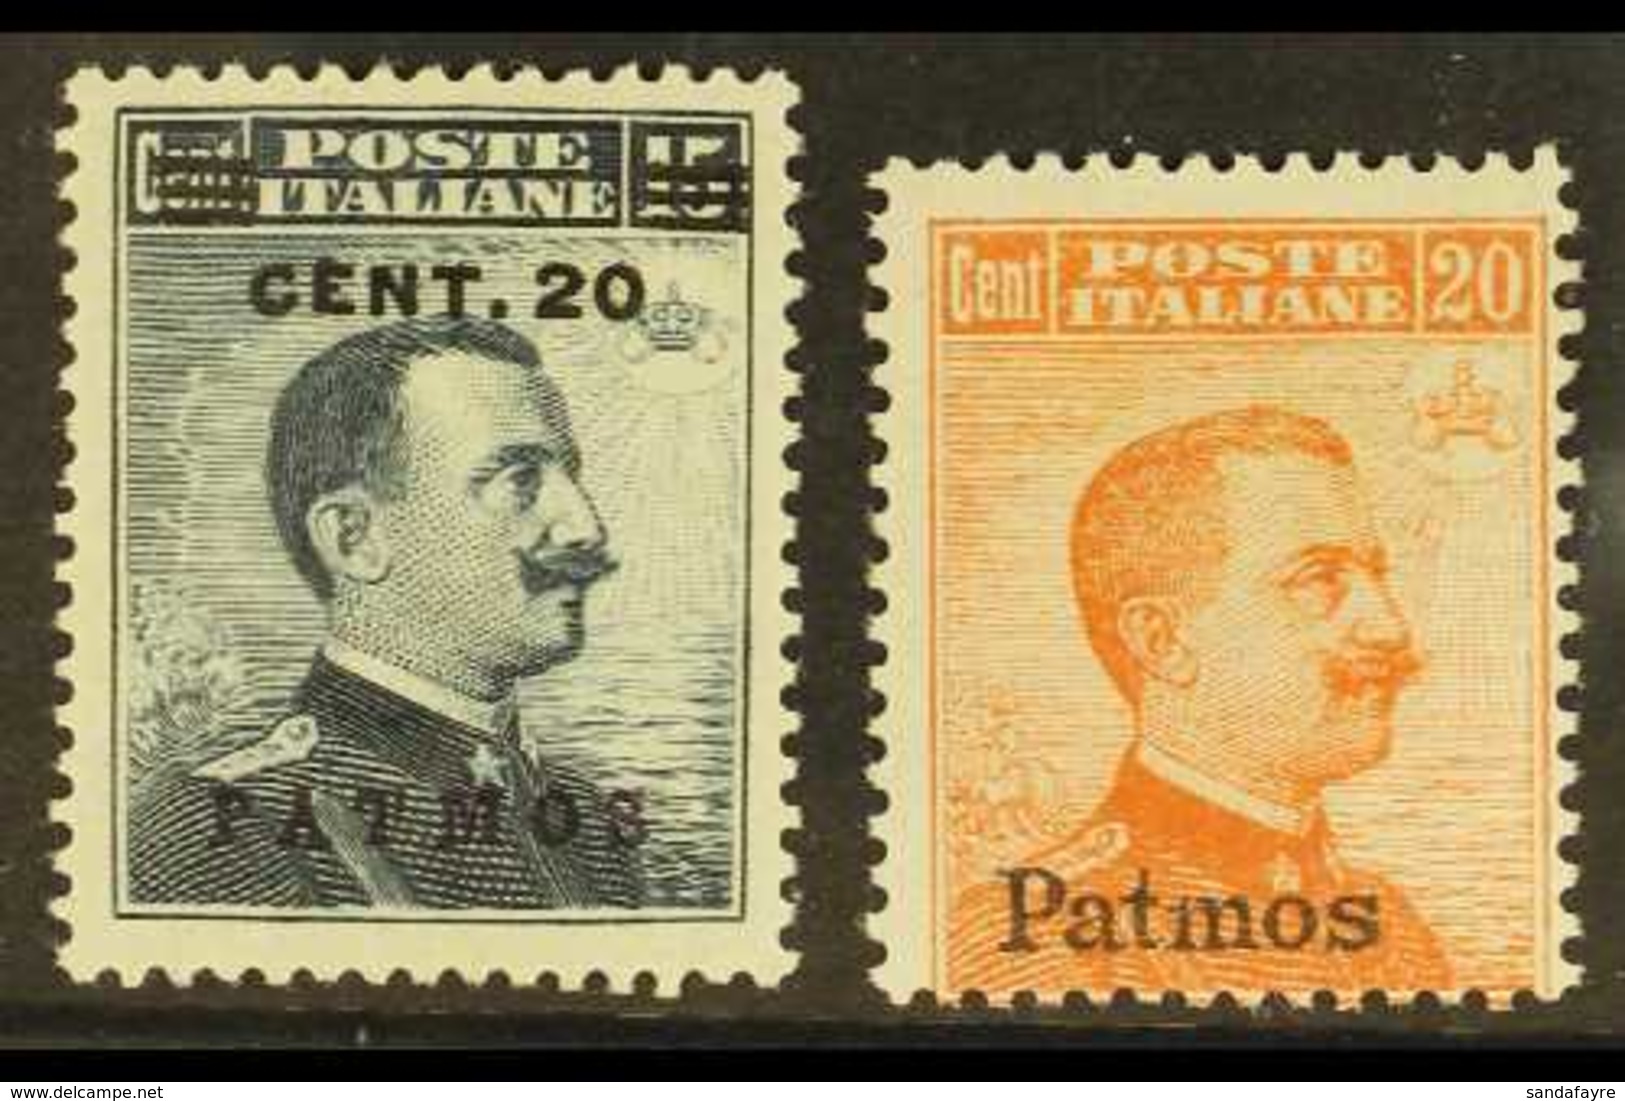 PATMOS 1916-17 20c On 15c Grey-black & 20c Orange, No Watermark, Sassone 8/9, Mi 10/11VIII, Fine Mint (2 Stamps). For Mo - Ägäis